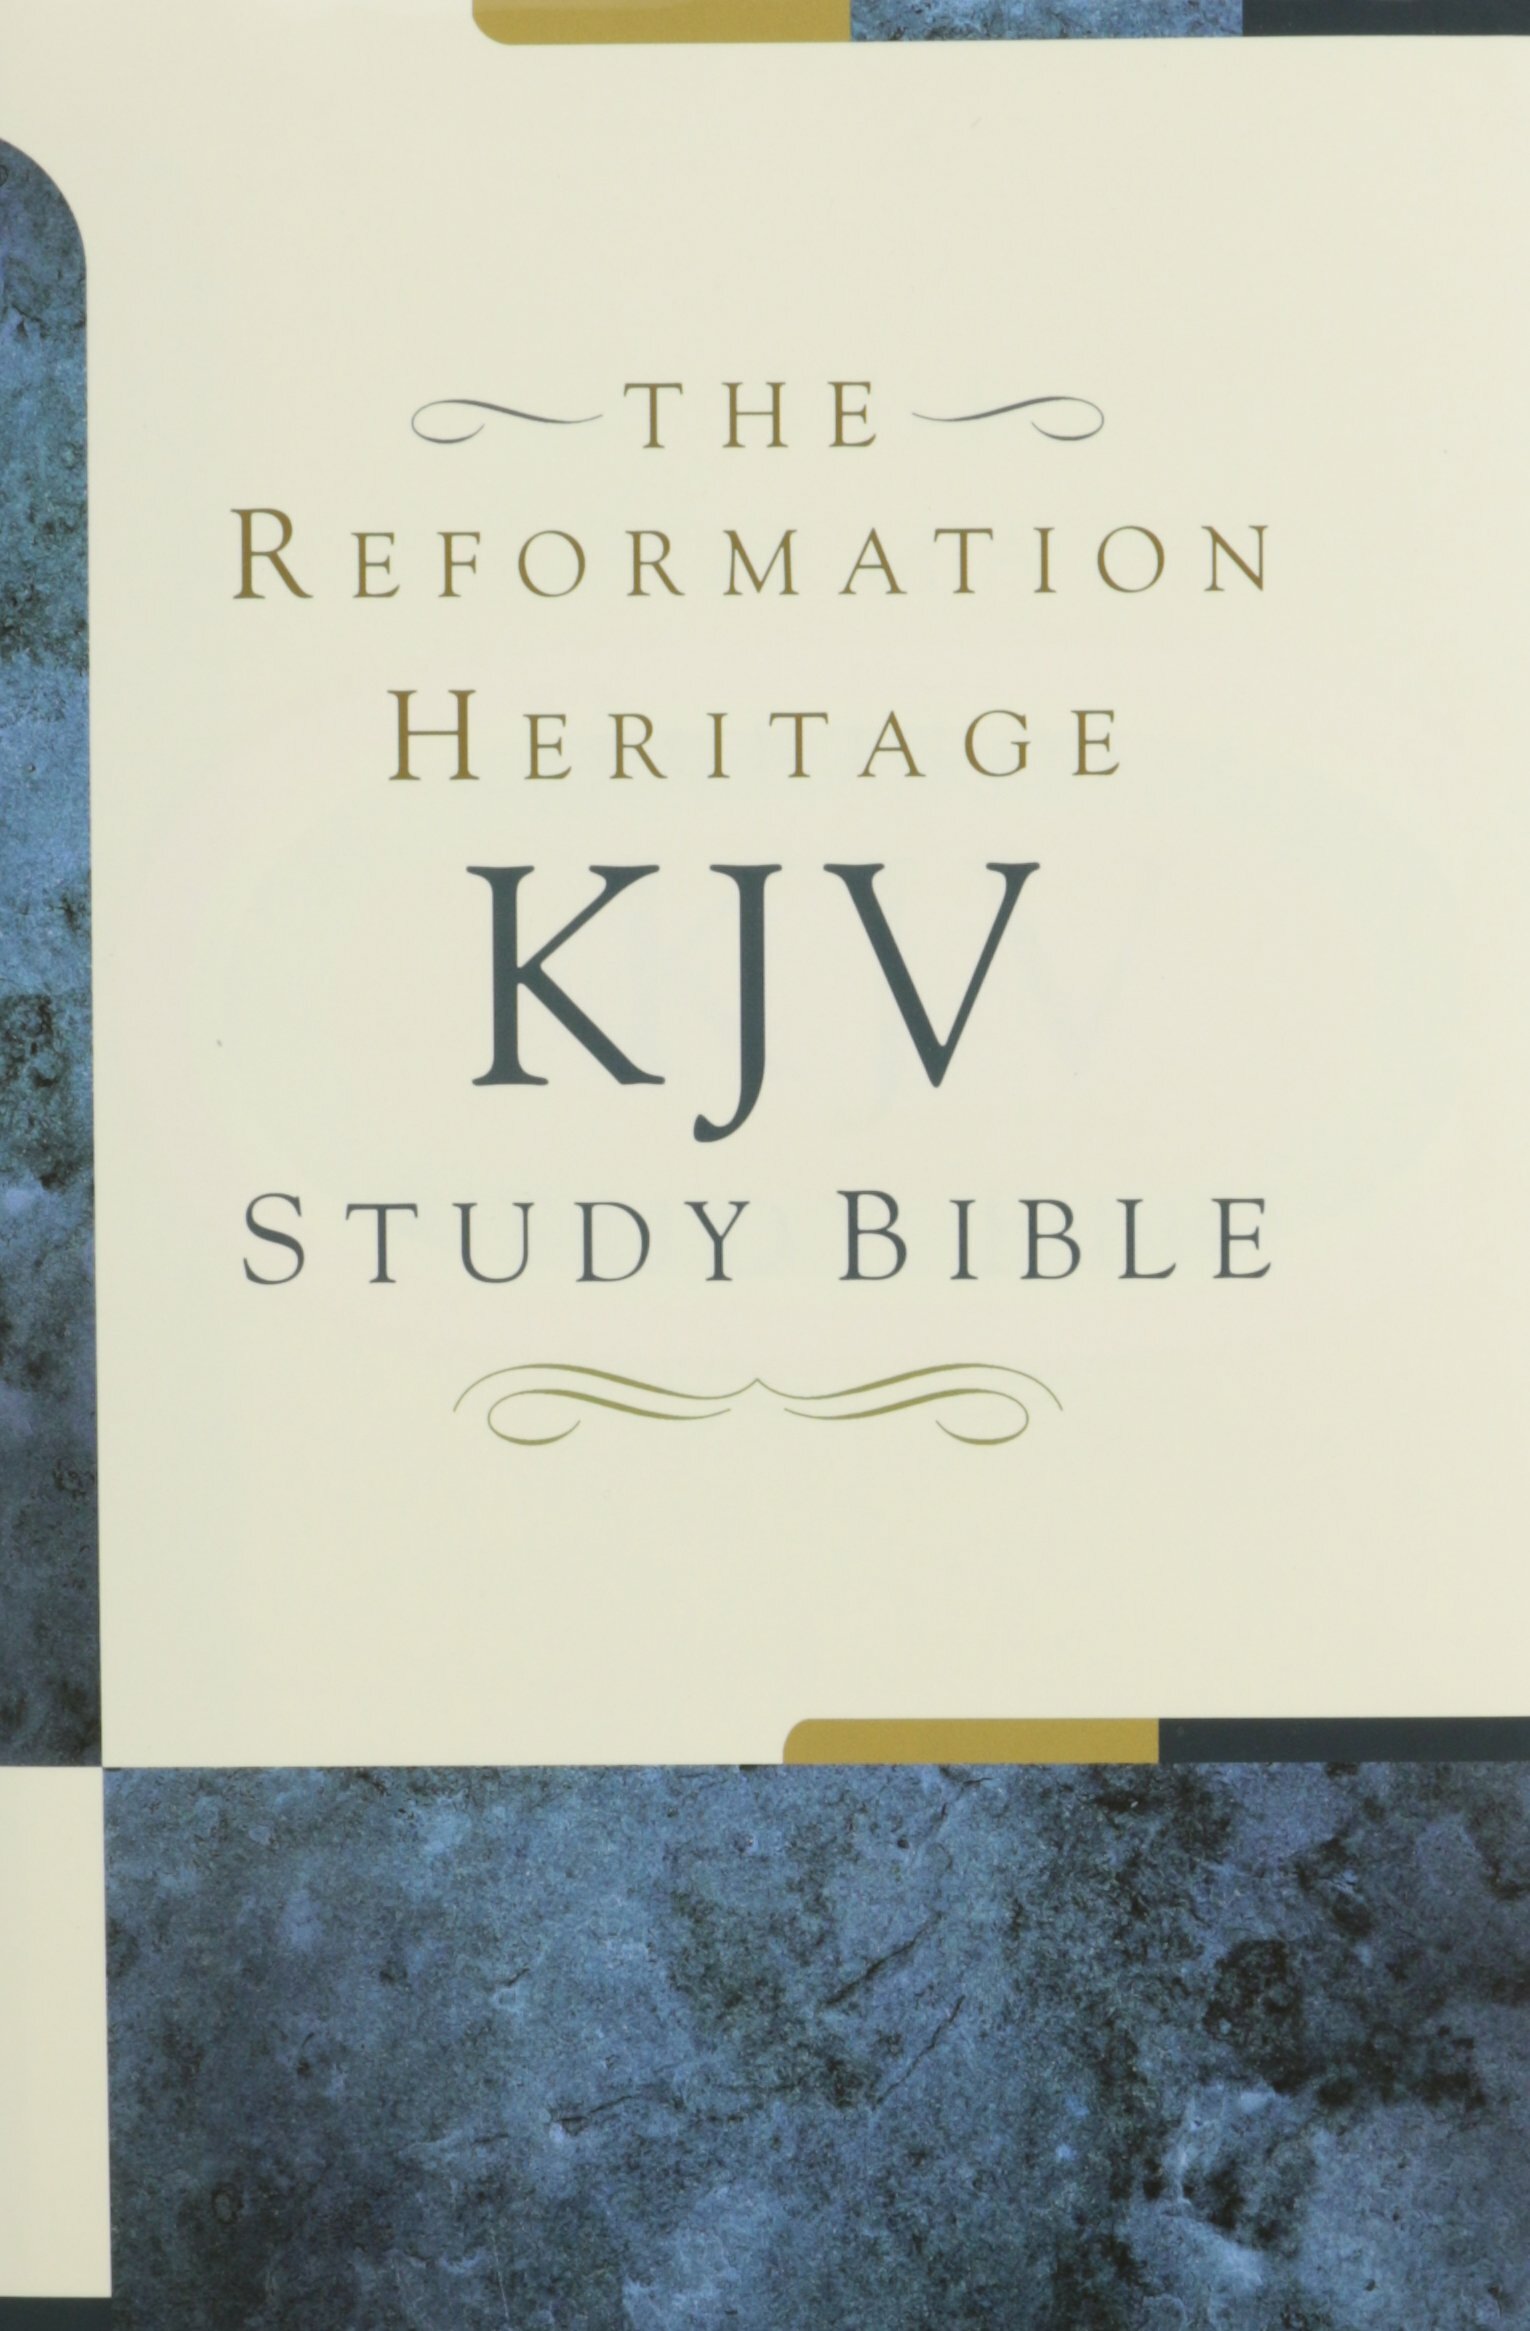 Reformation Heritage KJV Study Bible (Notes only)